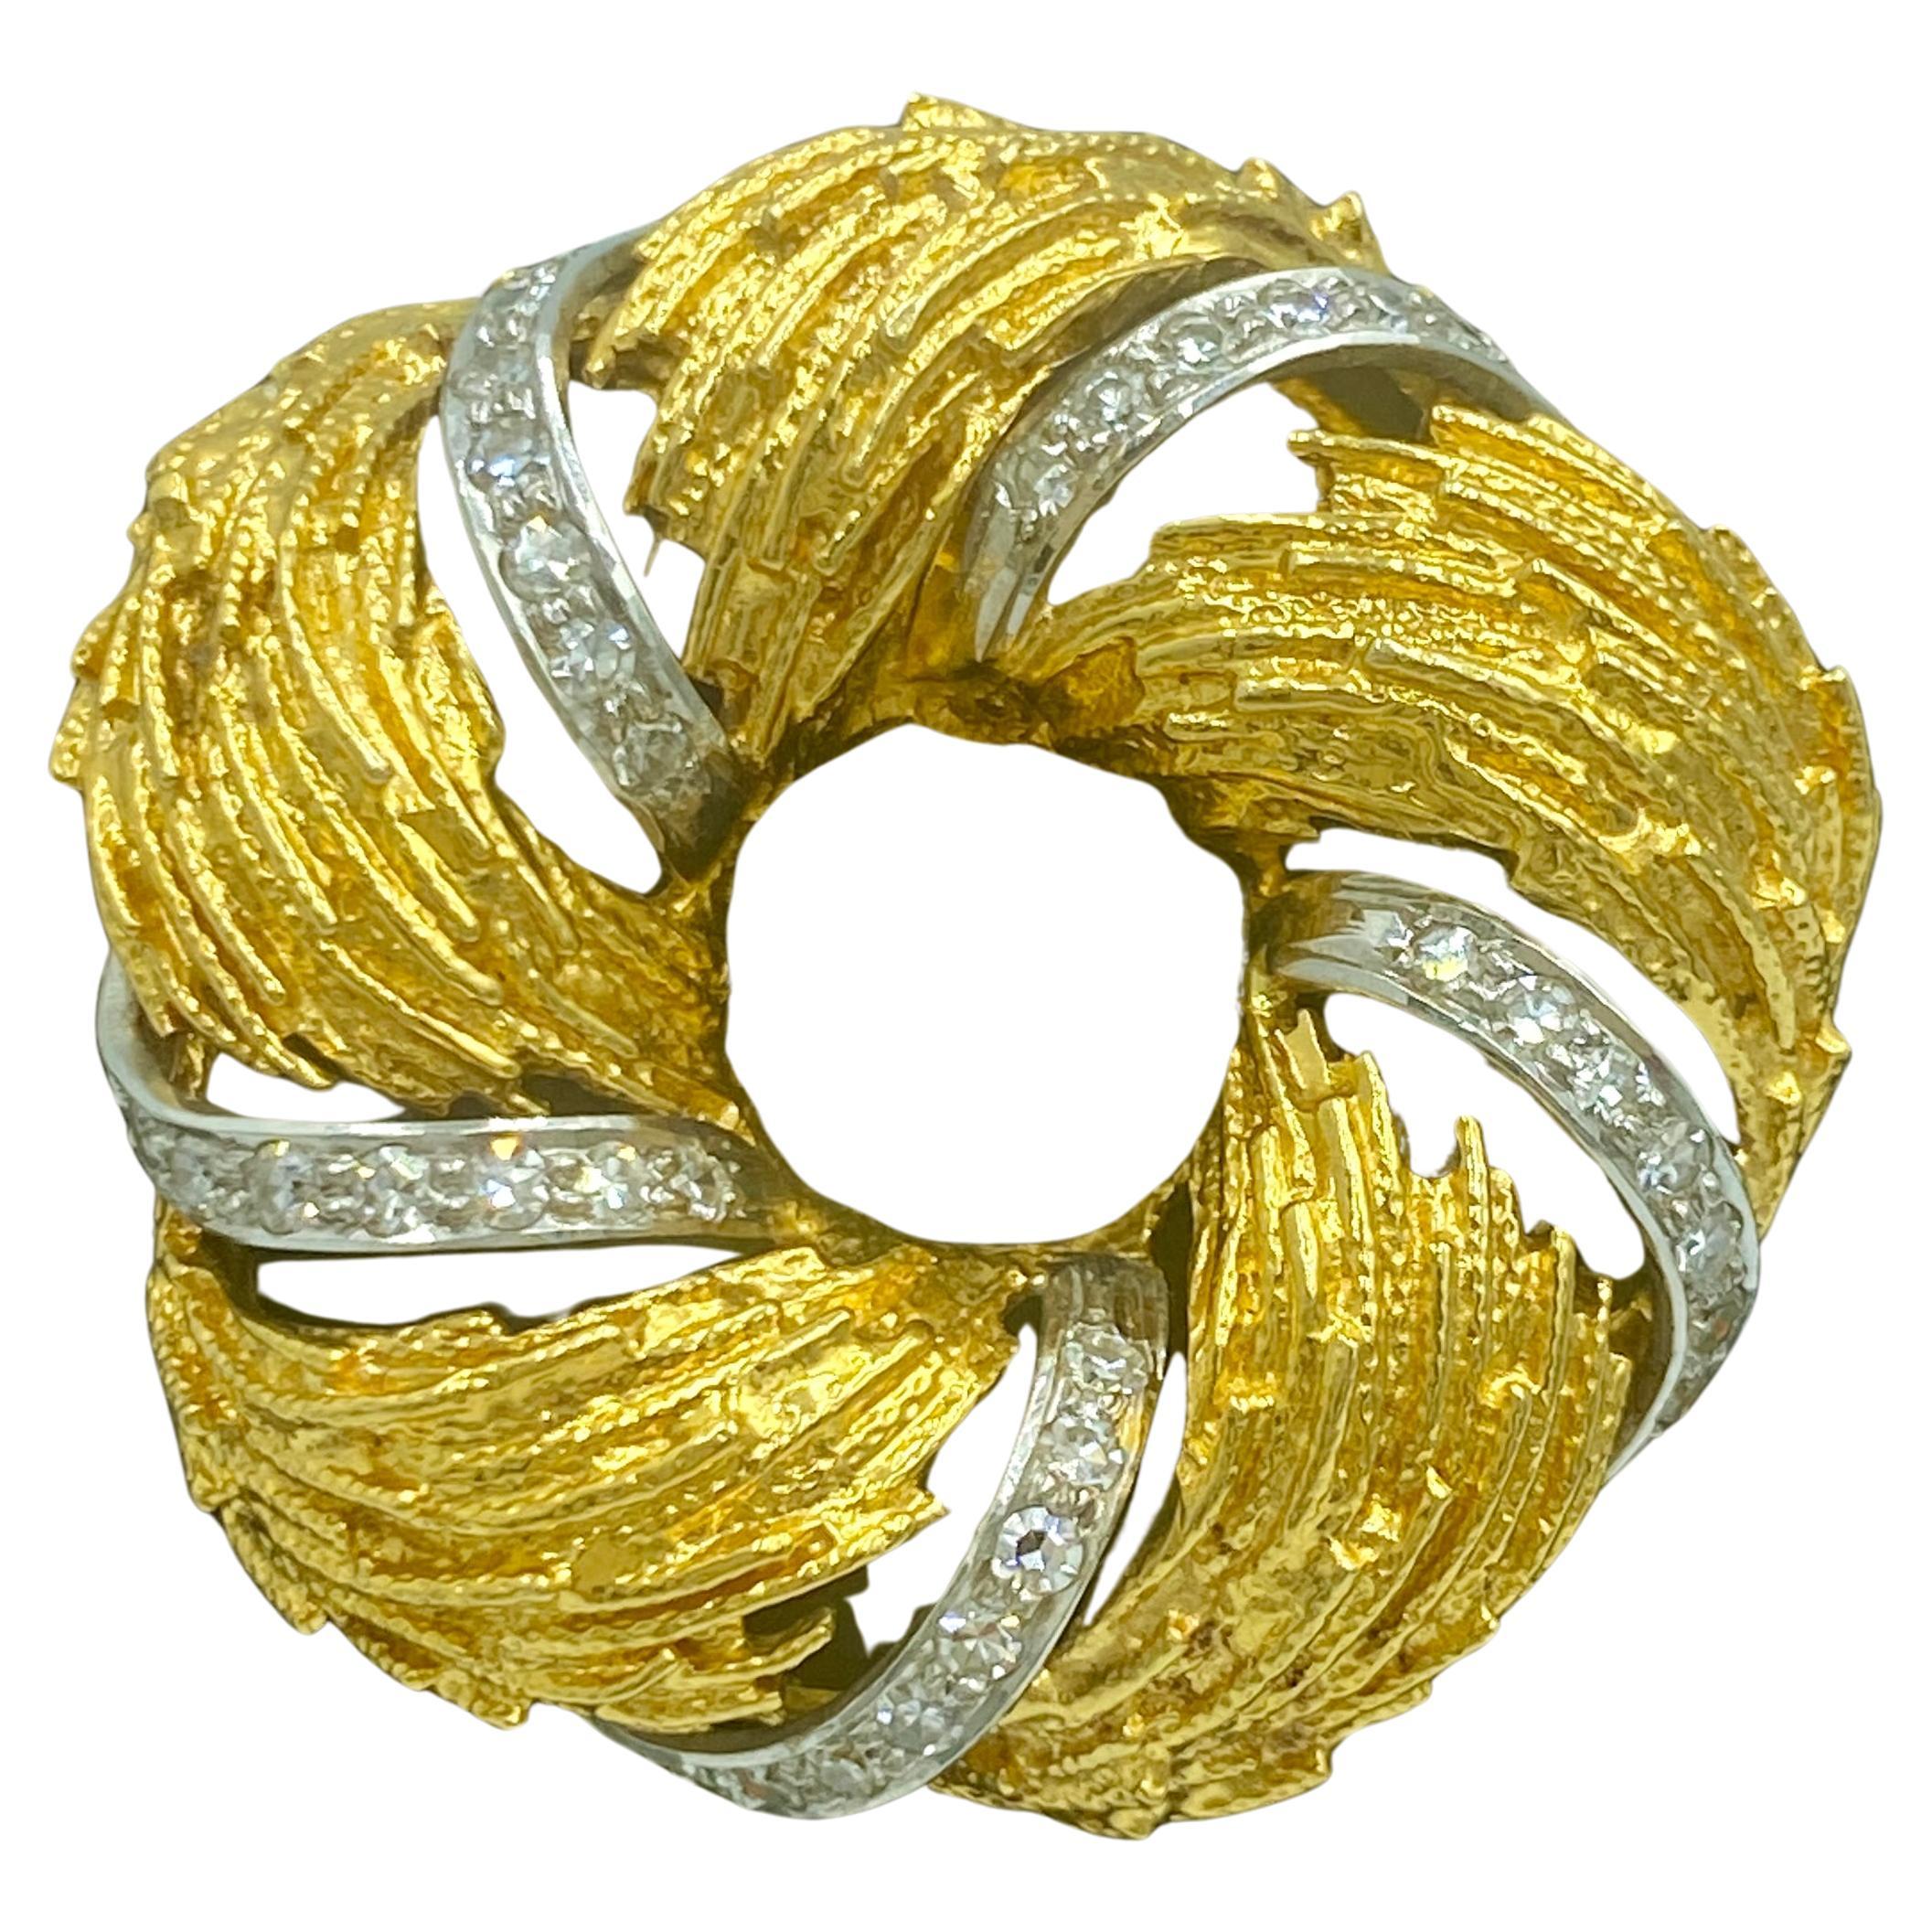 1960s European 18k gold and diamond wreath brooch